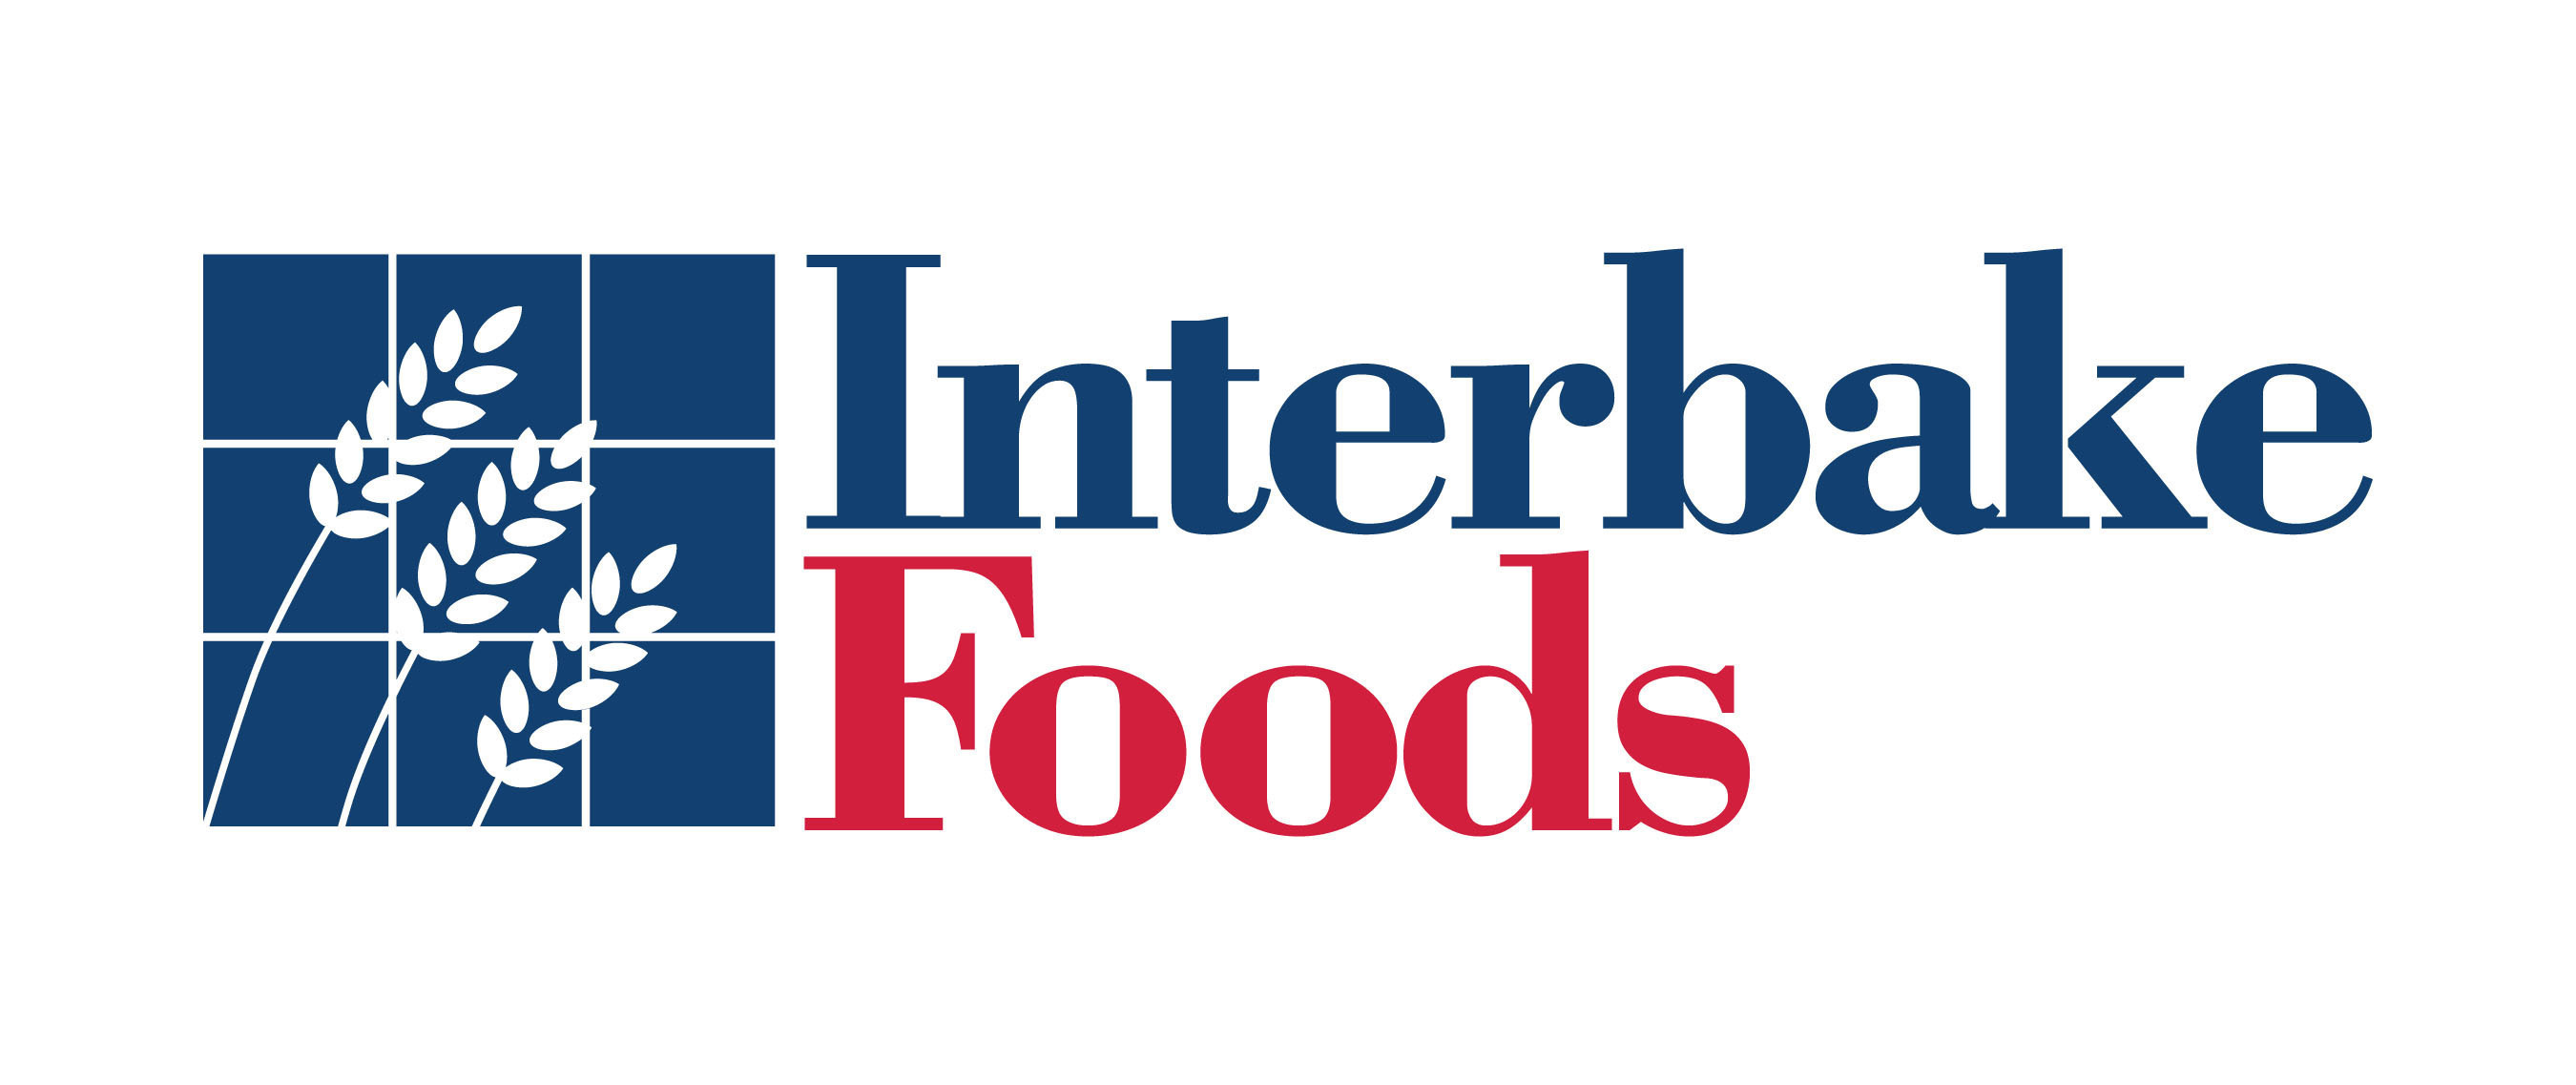 Interbake Foods LLC | Baked goods manufacturer (PRNewsFoto/Interbake Foods LLC) (PRNewsFoto/Interbake Foods LLC)